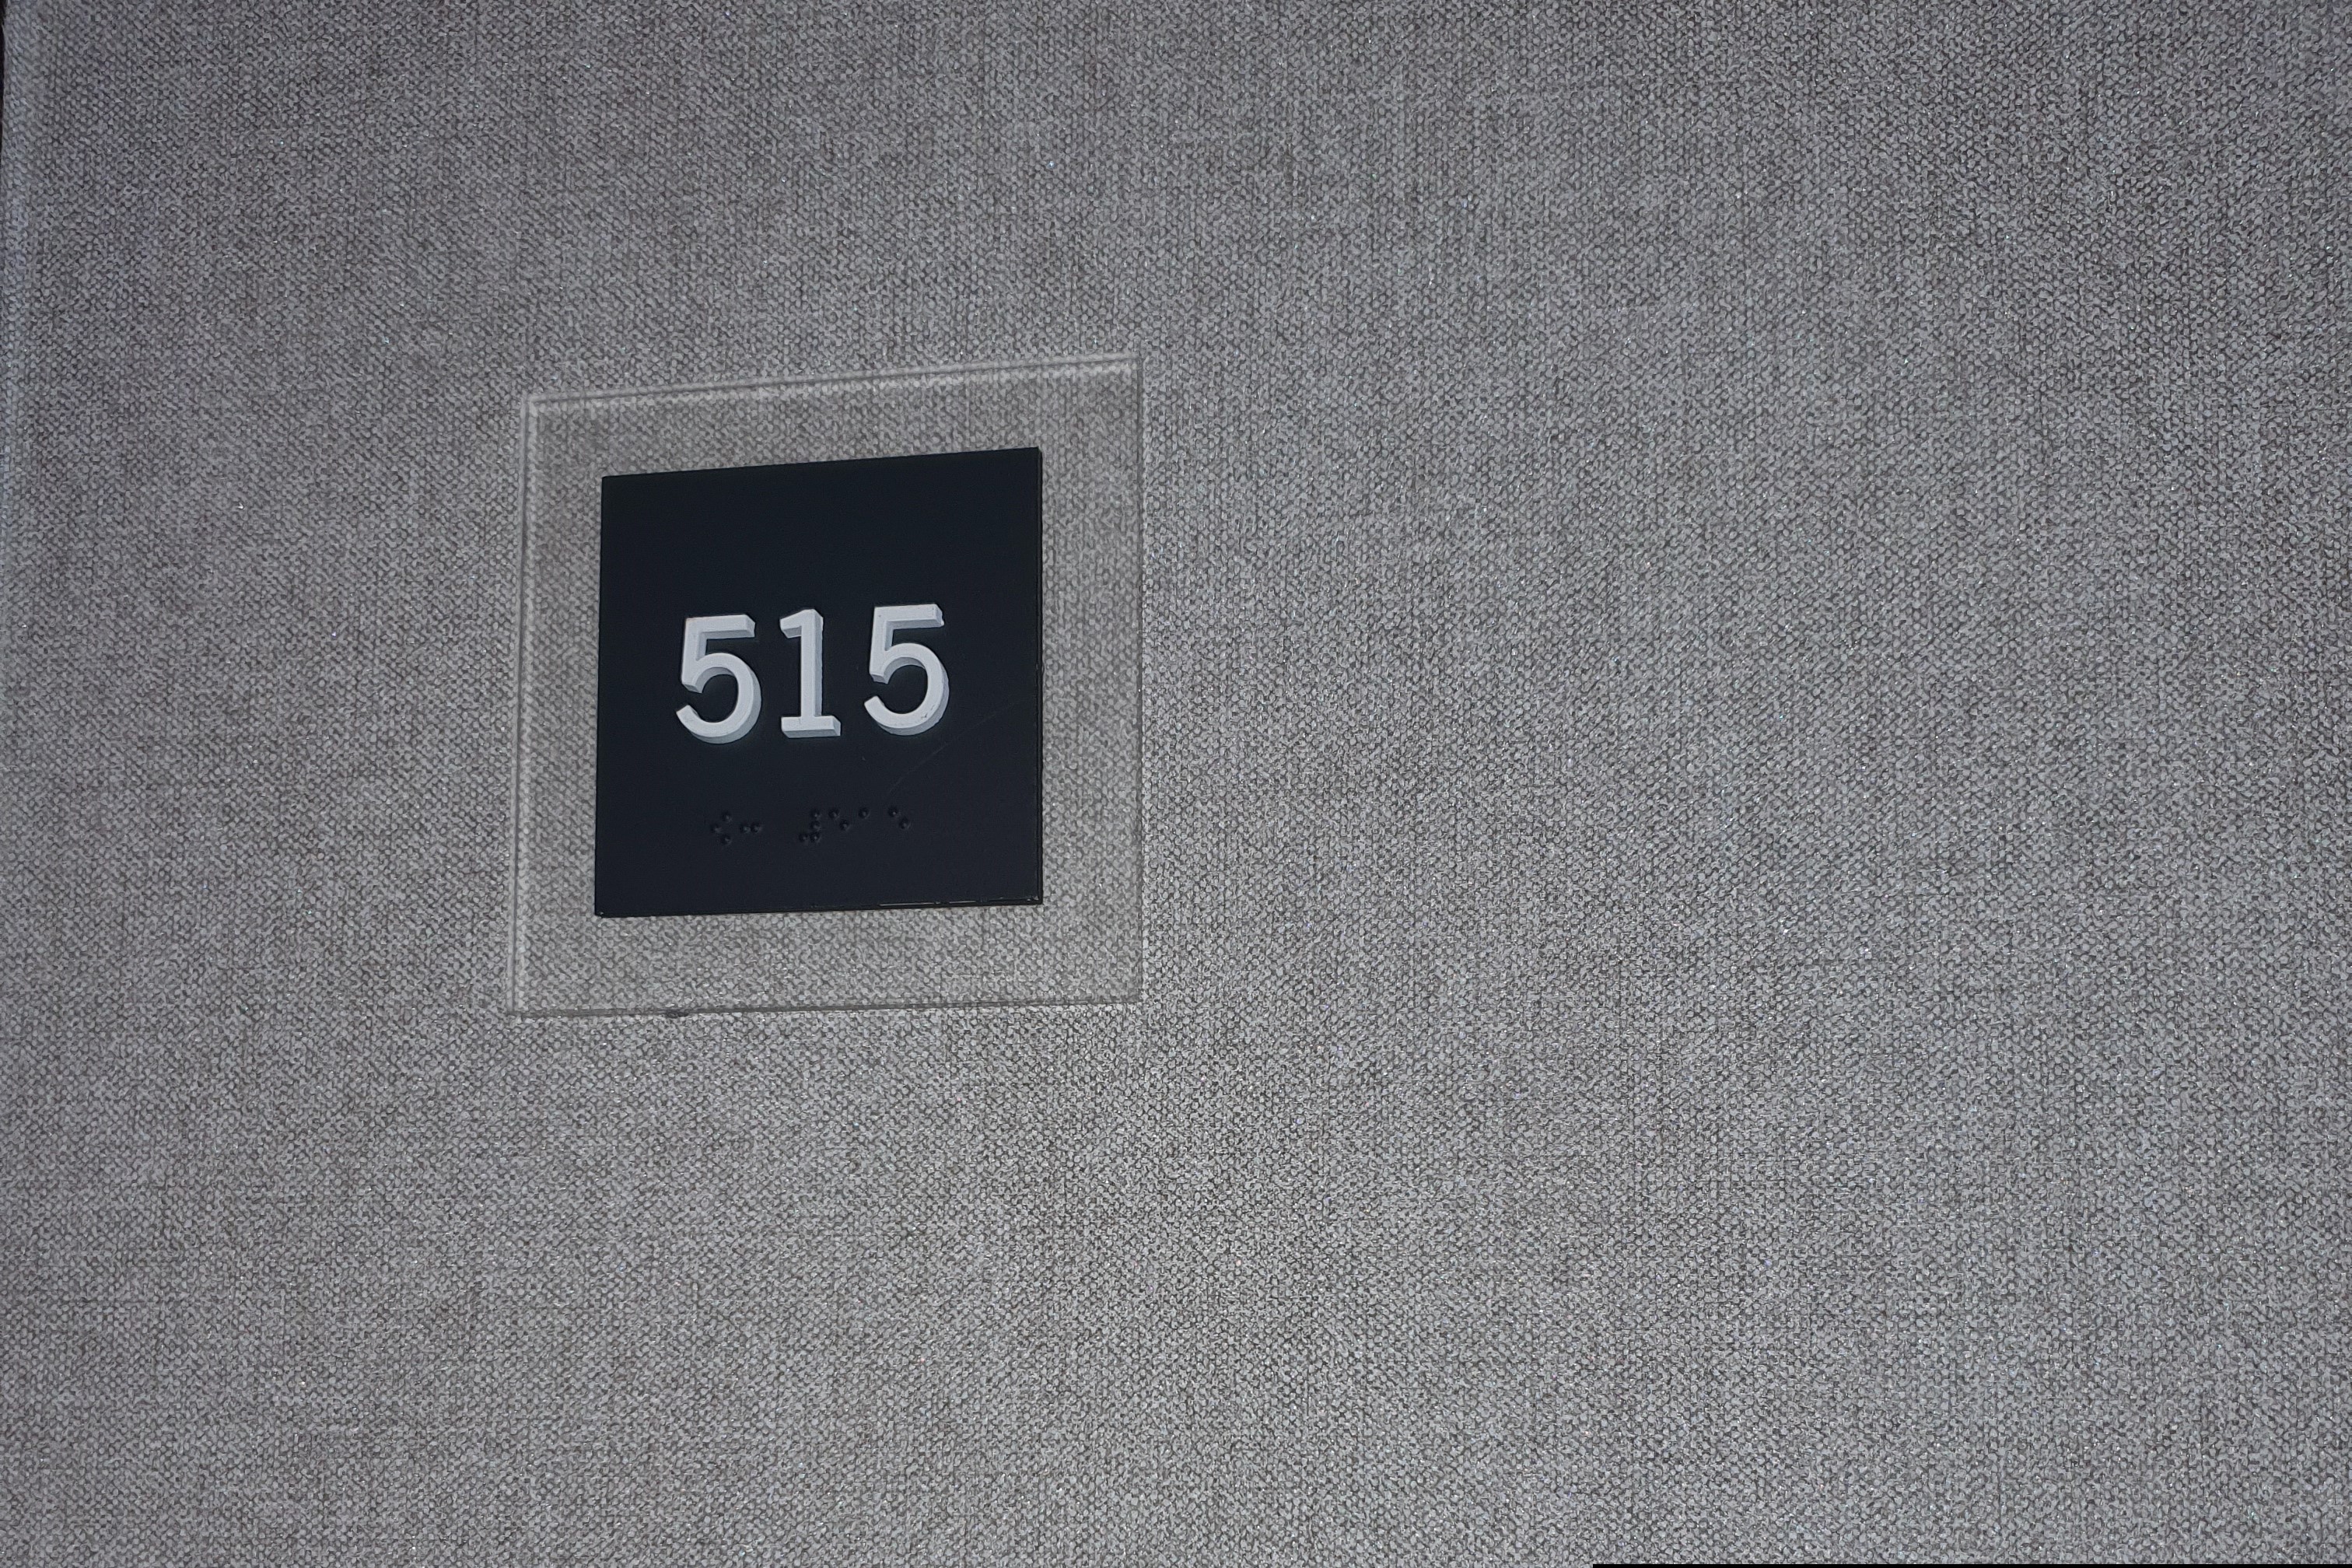 Accessible guestroom0 : Hotel door number plate with Korean braille